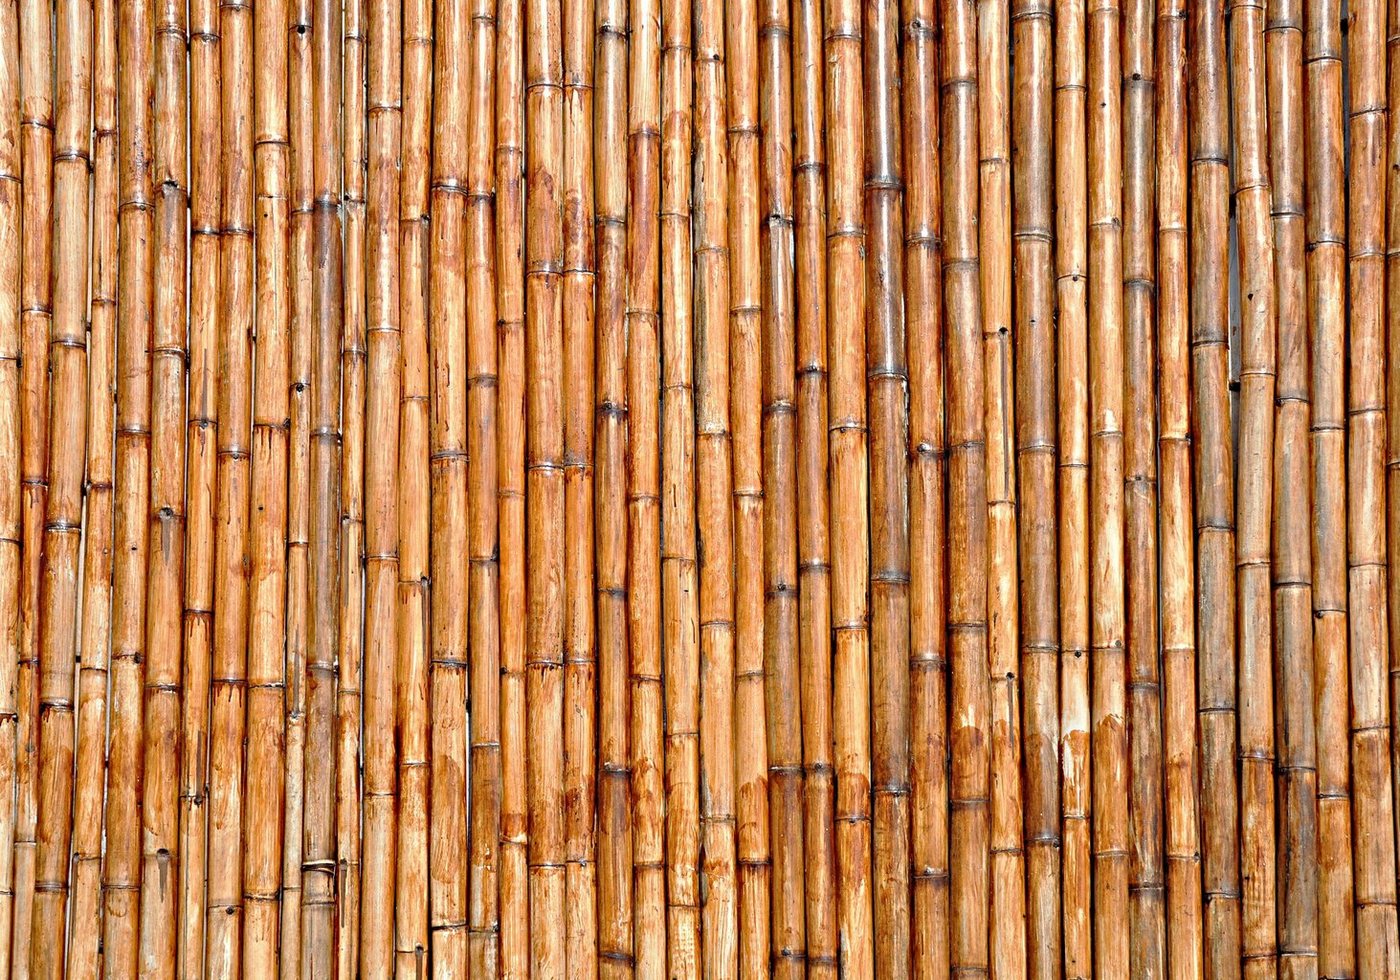 wandmotiv24 Fototapete Bambus Holz Natur, strukturiert, Wandtapete, Motivtapete, matt, Vinyltapete, selbstklebend von wandmotiv24